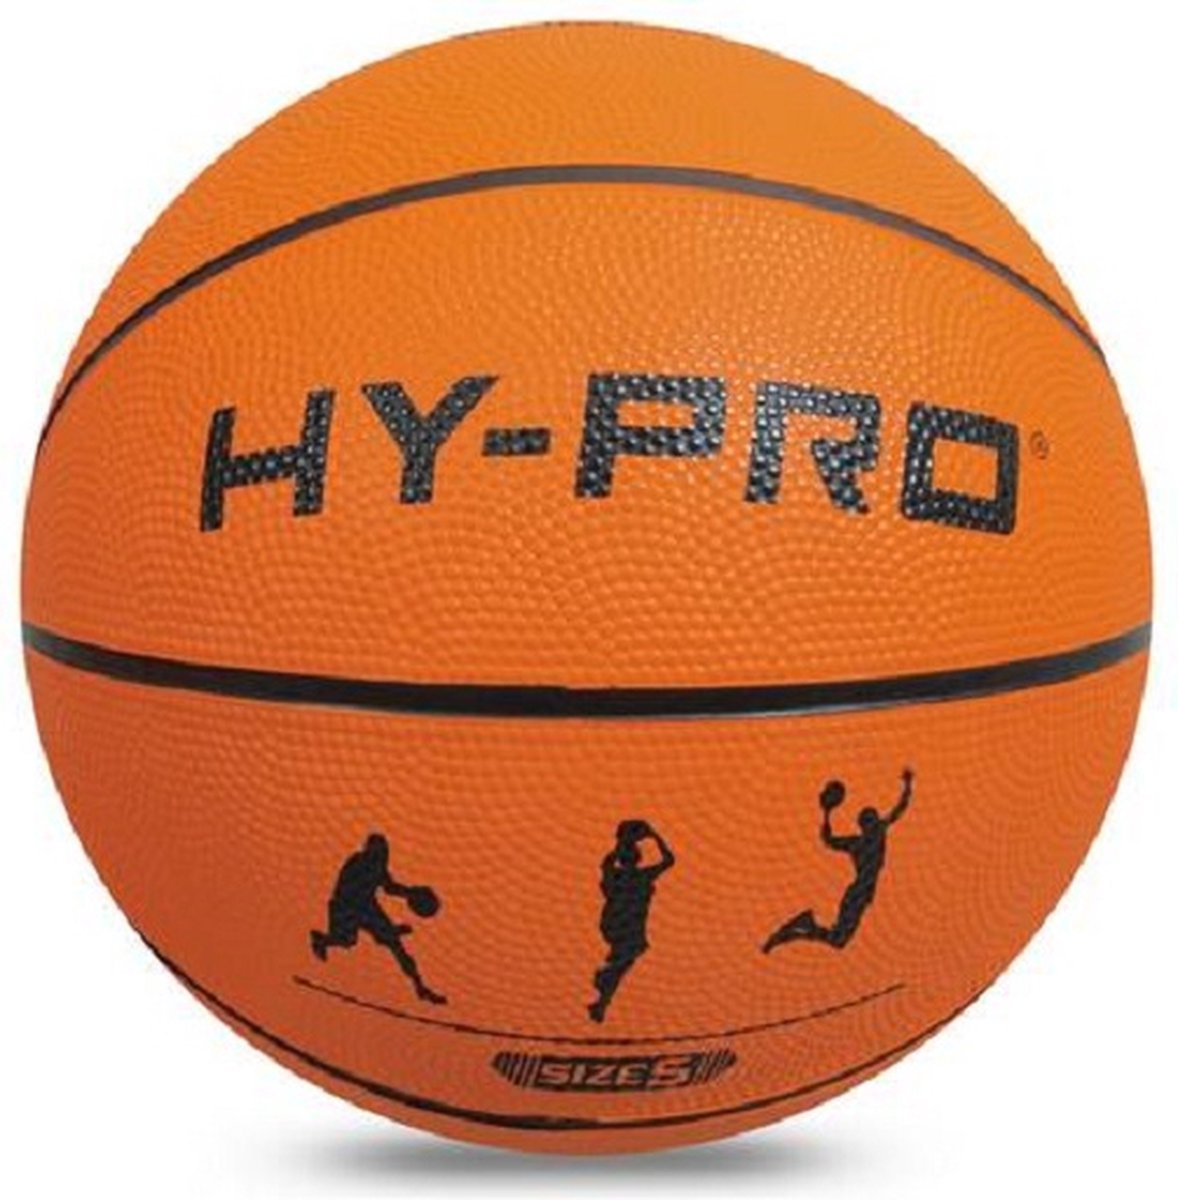 Hy-Pro Size 5 Rubber Basketbal